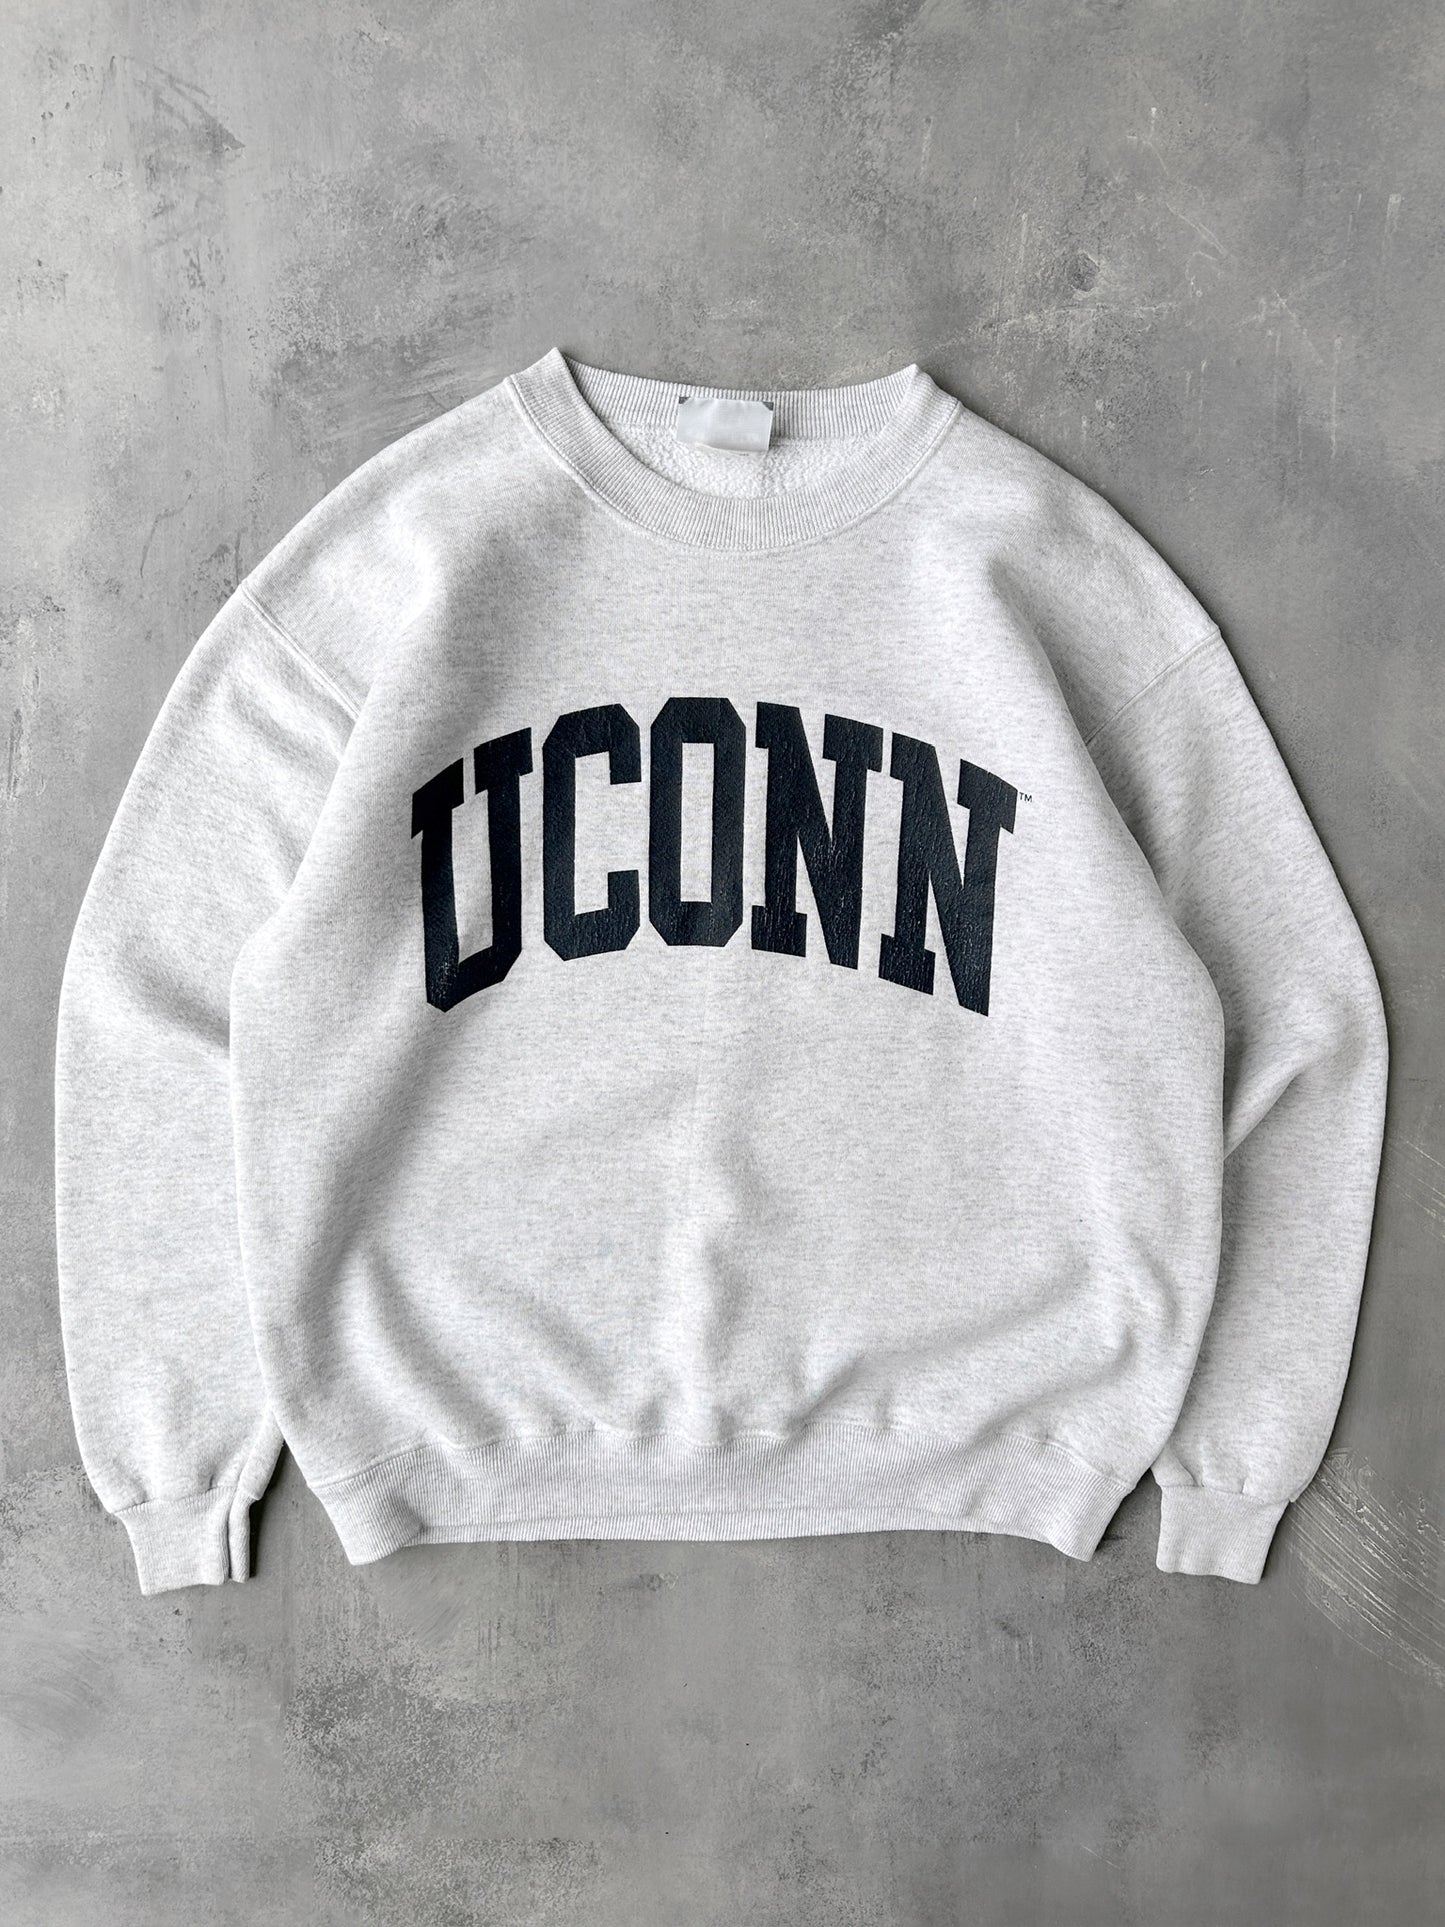 University of Connecticut Sweatshirt 90's - Large